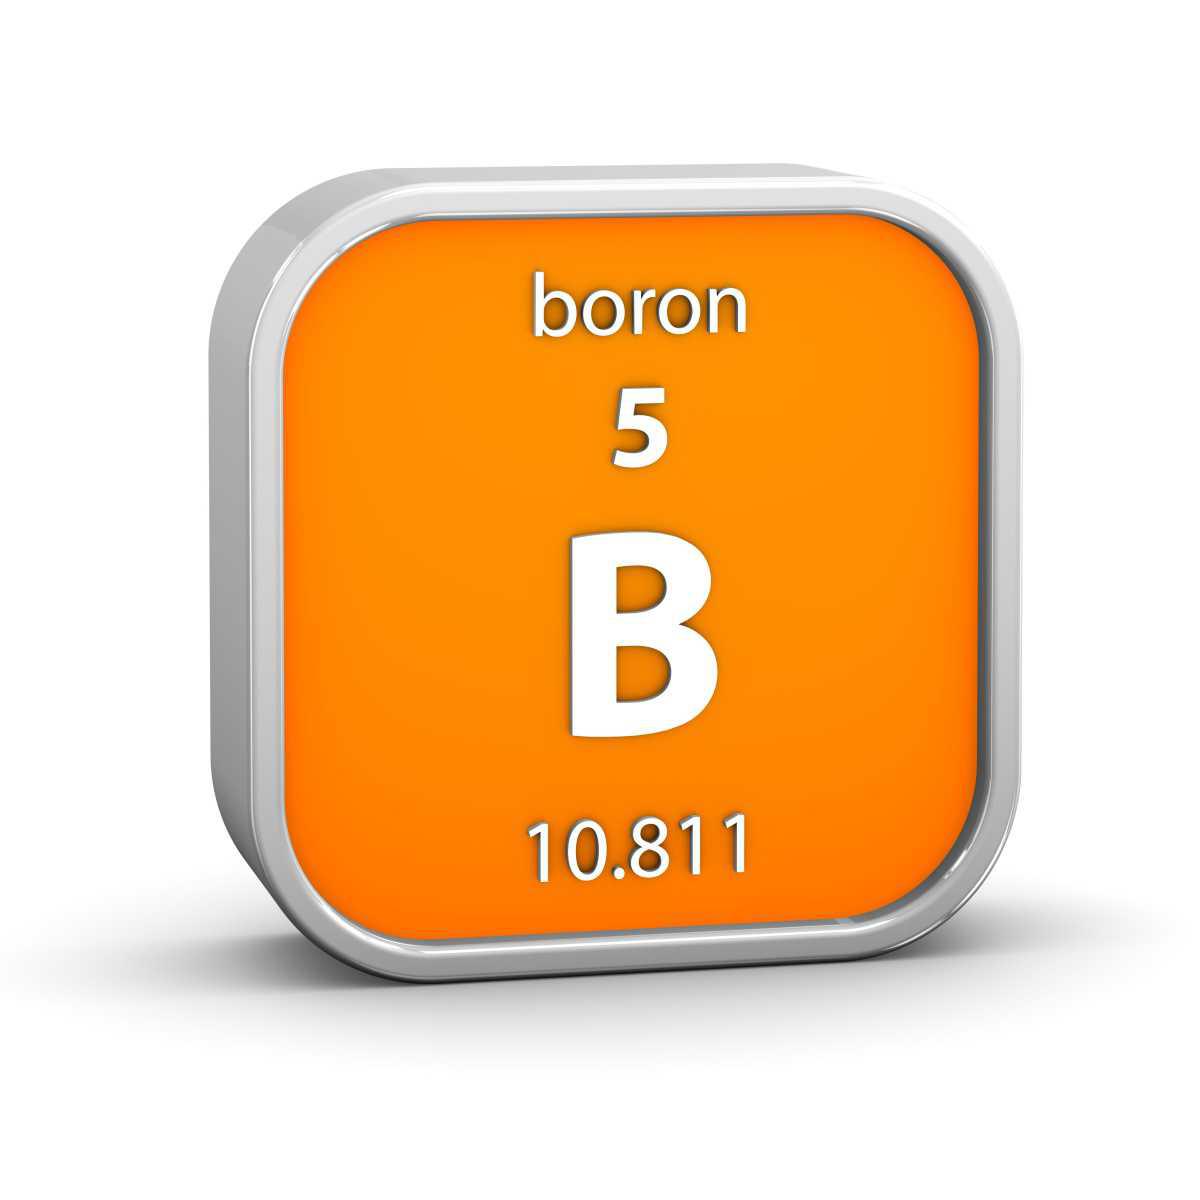 Boro (B)